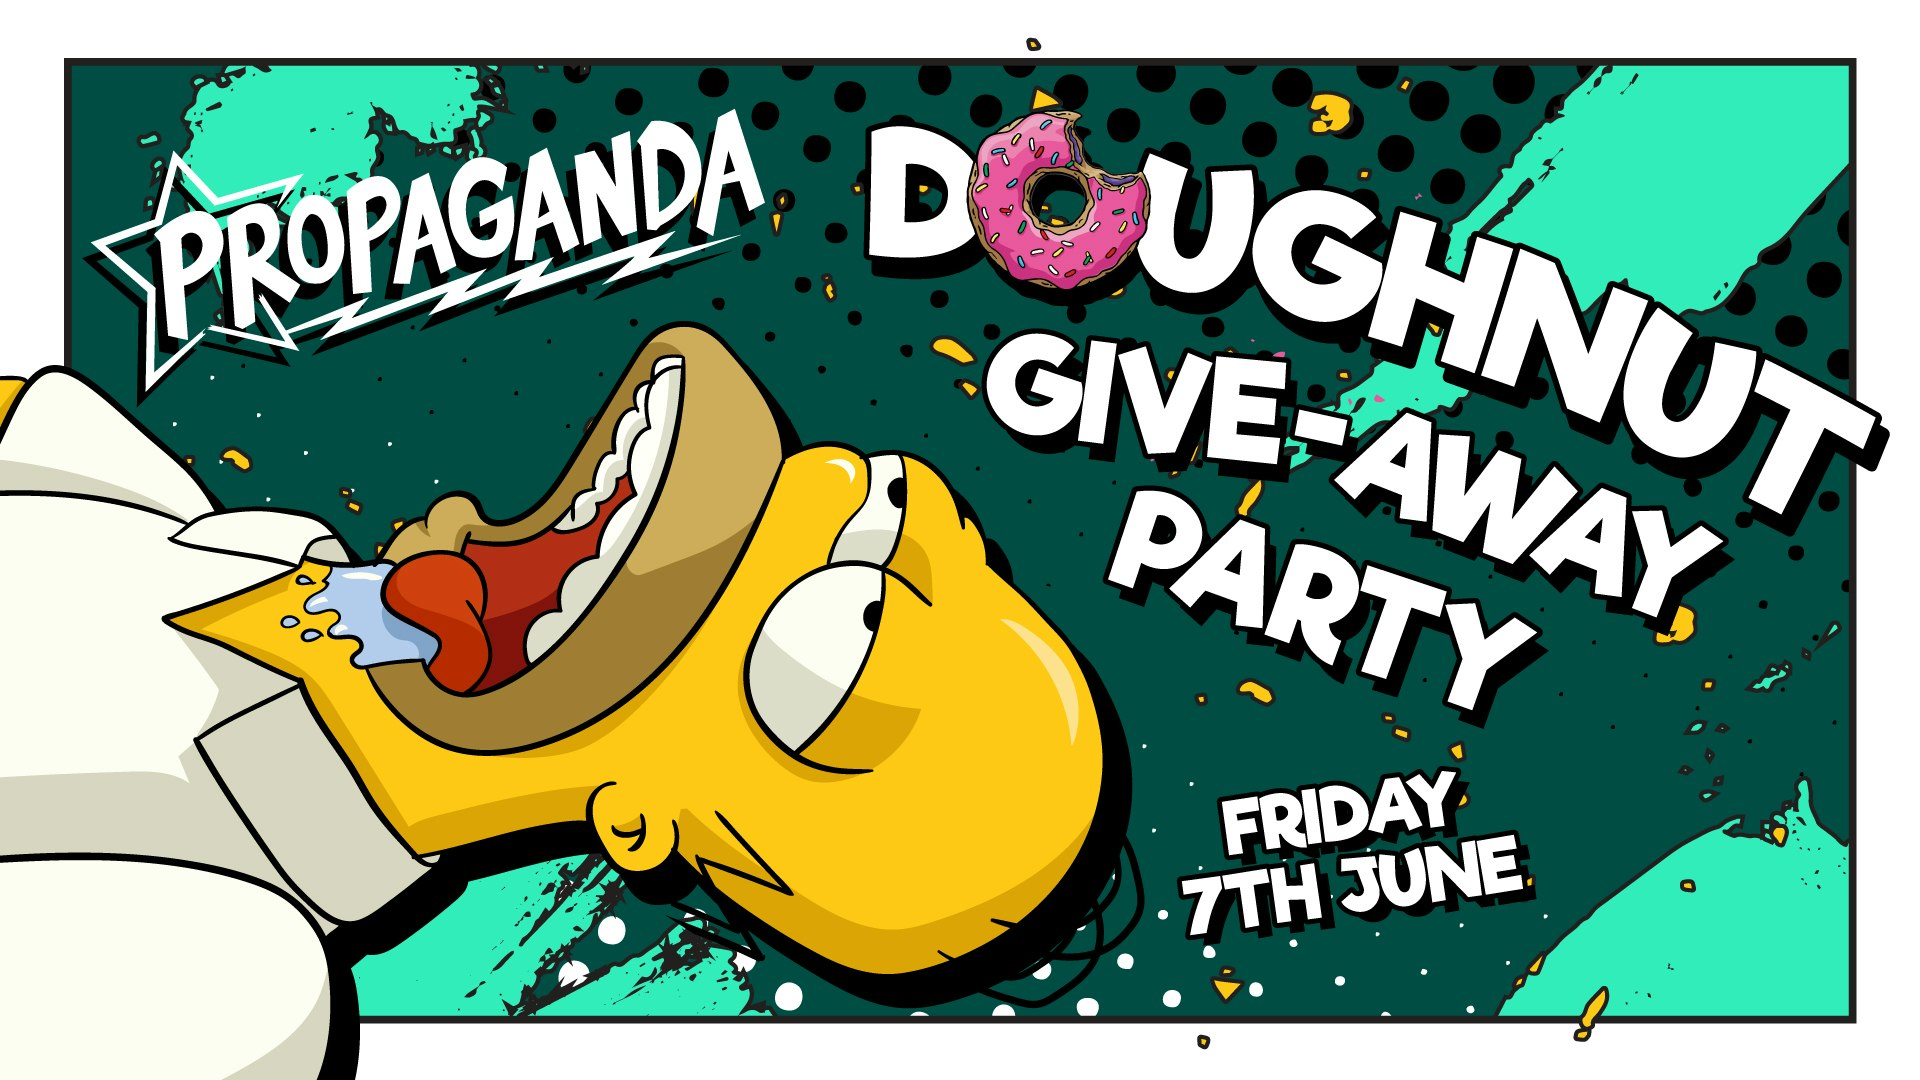 Propaganda Edinburgh – Doughnut Party